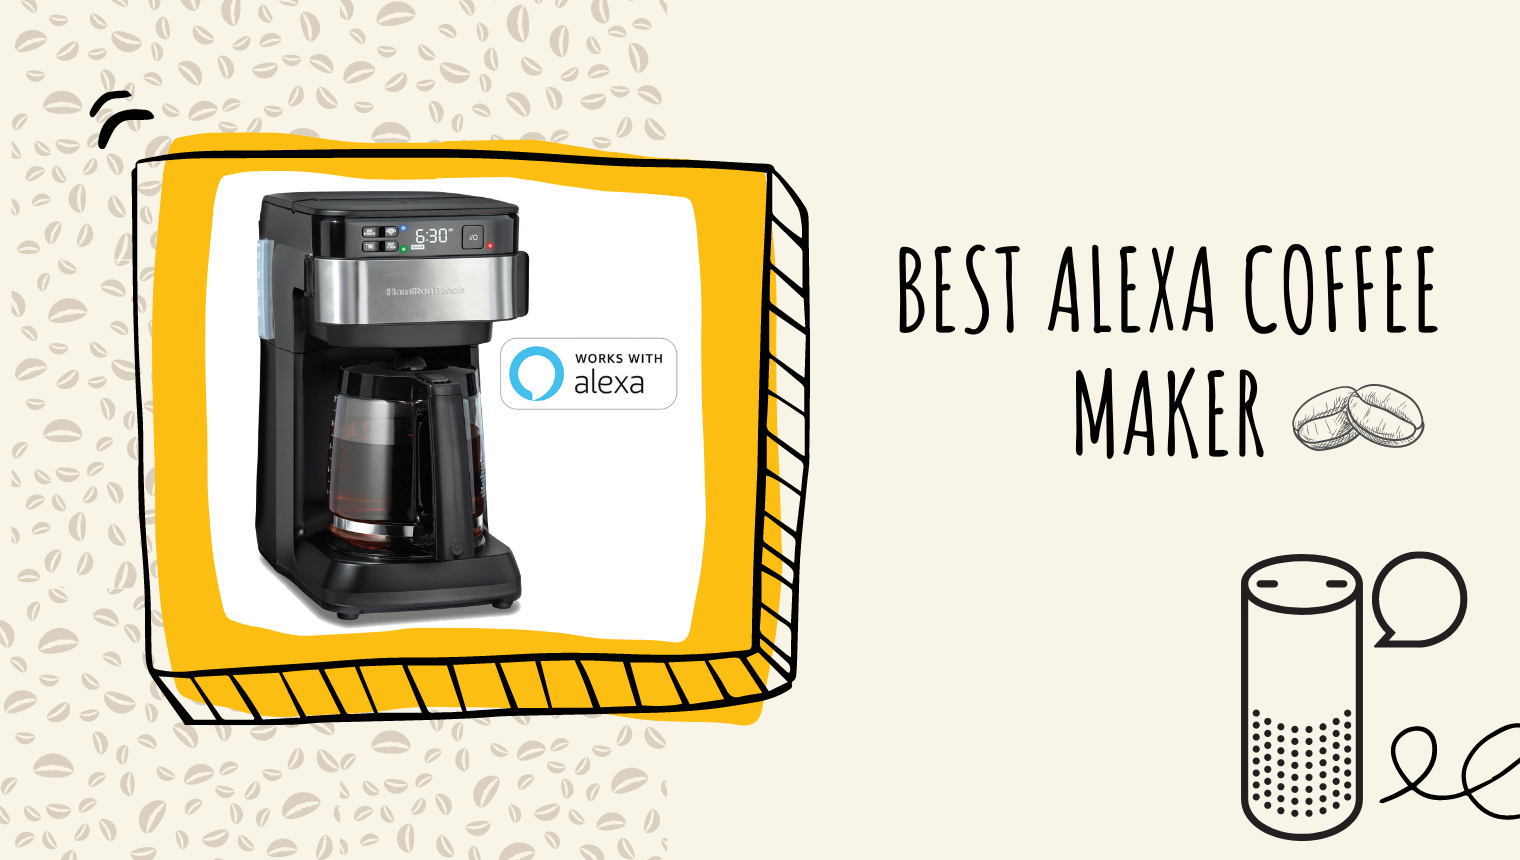 Best Alexa Coffee Maker